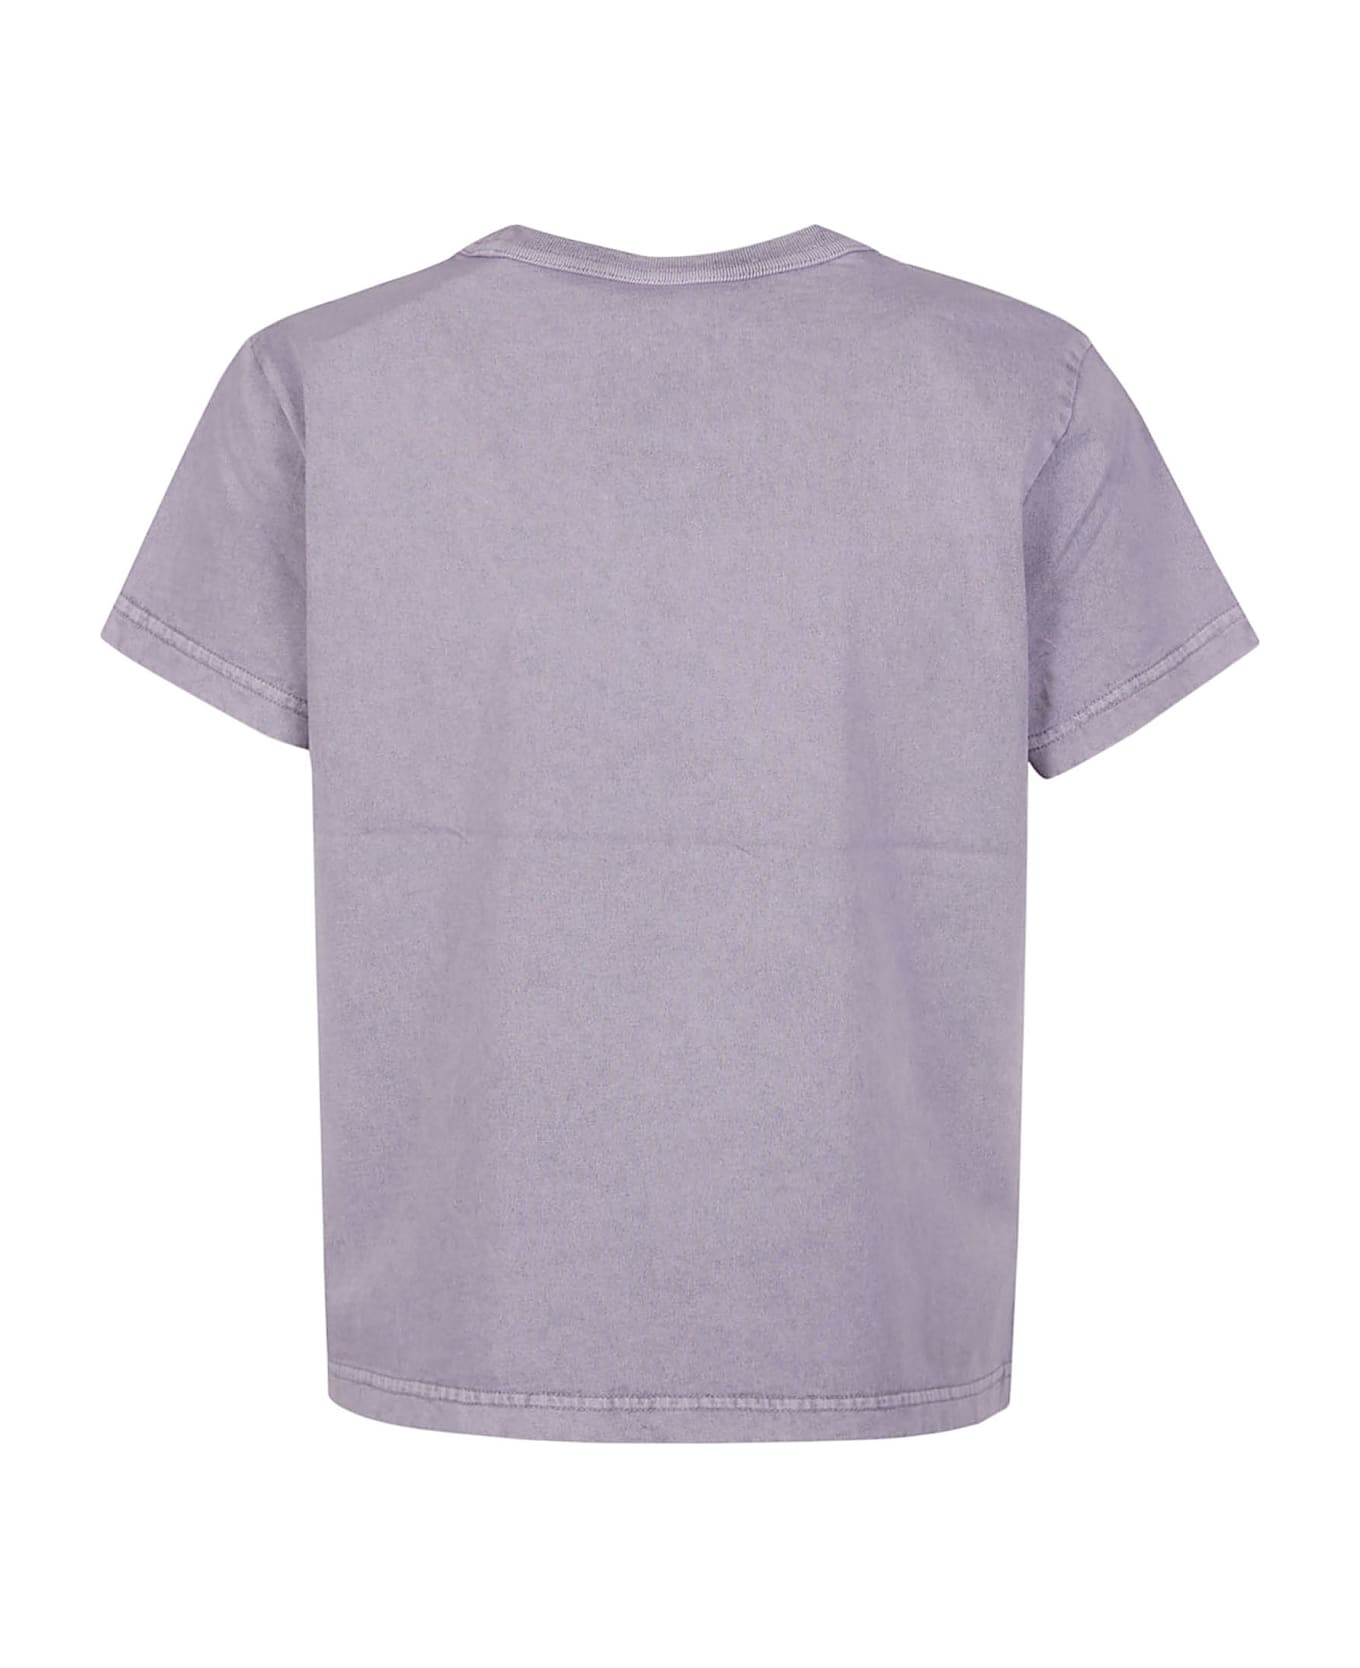 T by Alexander Wang Puff Logo Bound Neck Essential Shrunk T-shirt - A Acid Pink Lavender